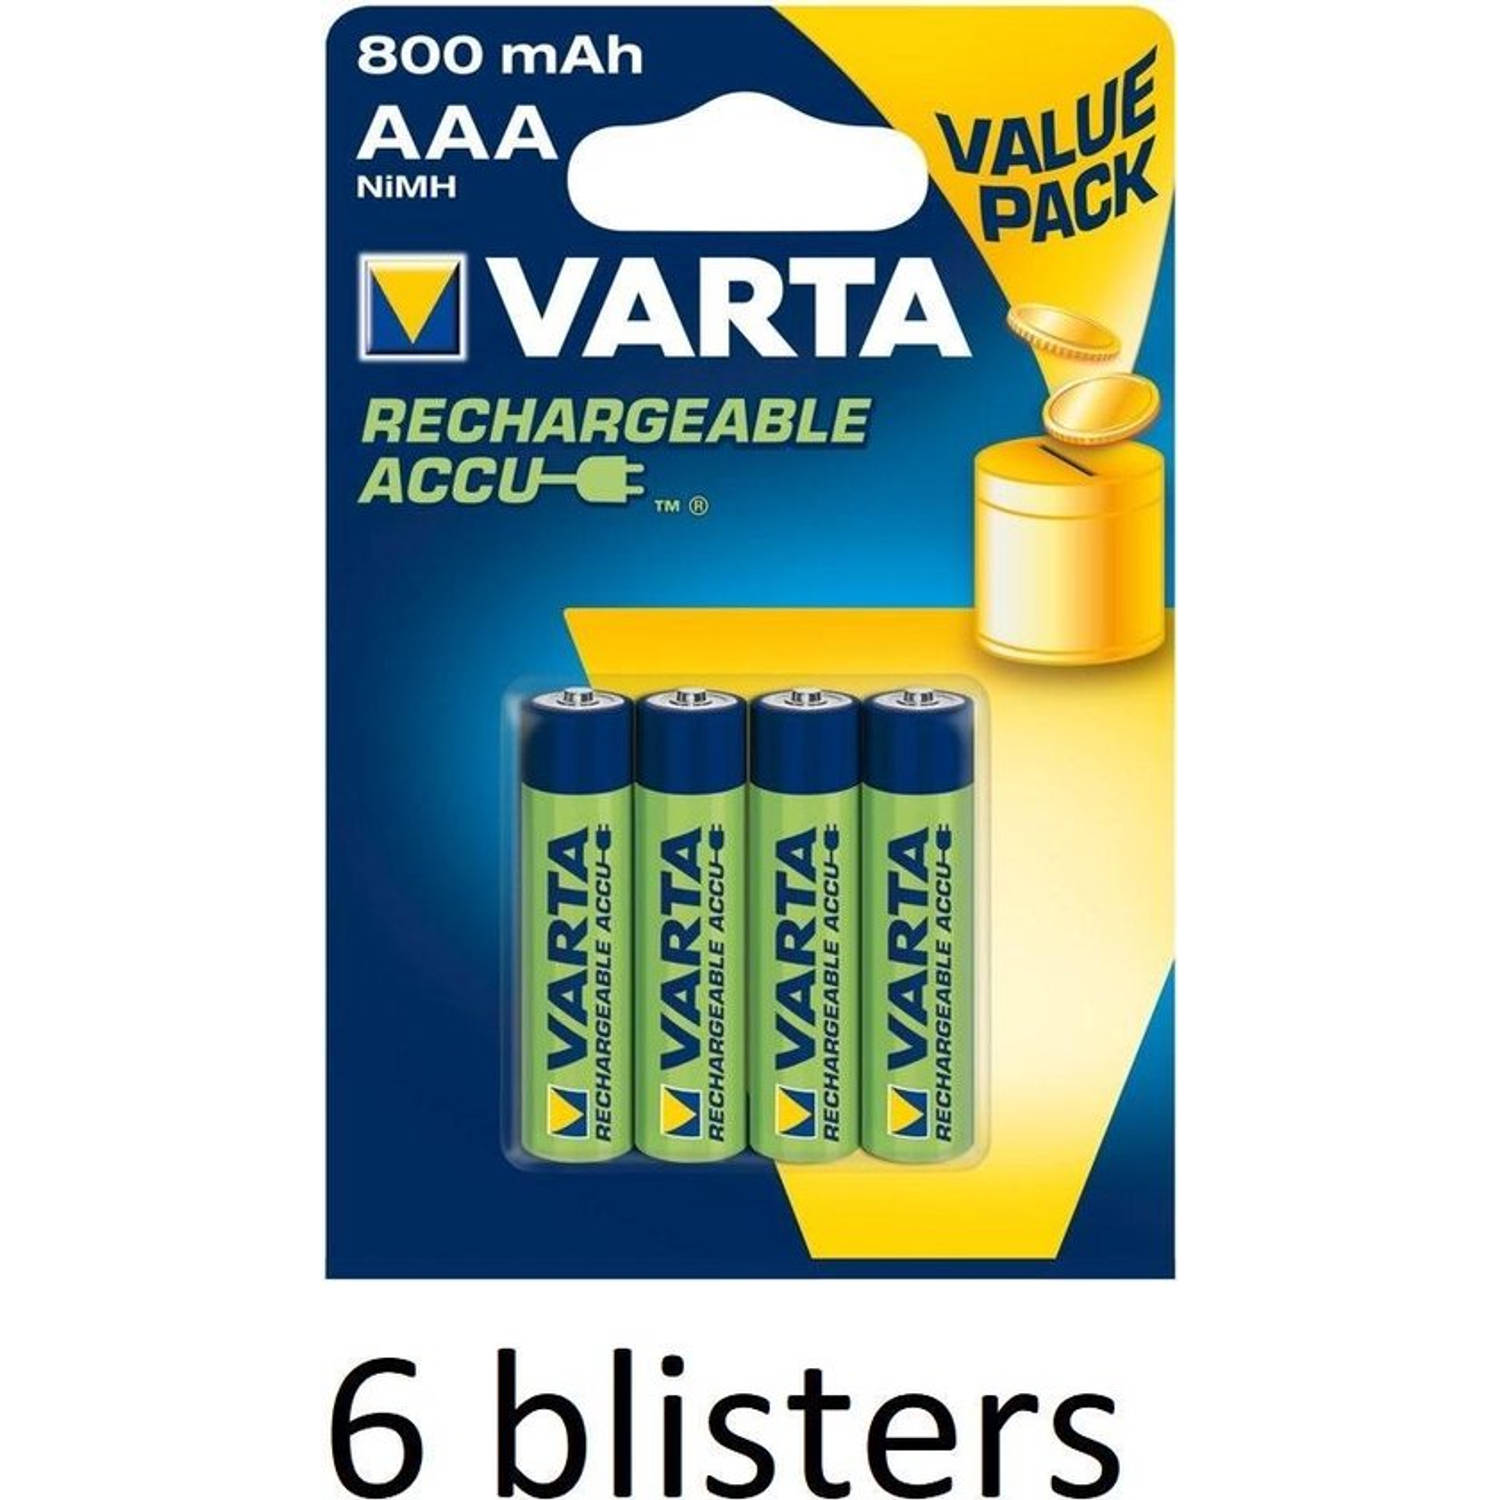 24 stuks (6 blisters a 4 stuks) Varta Rechargeable Accu AAA 800 mAh